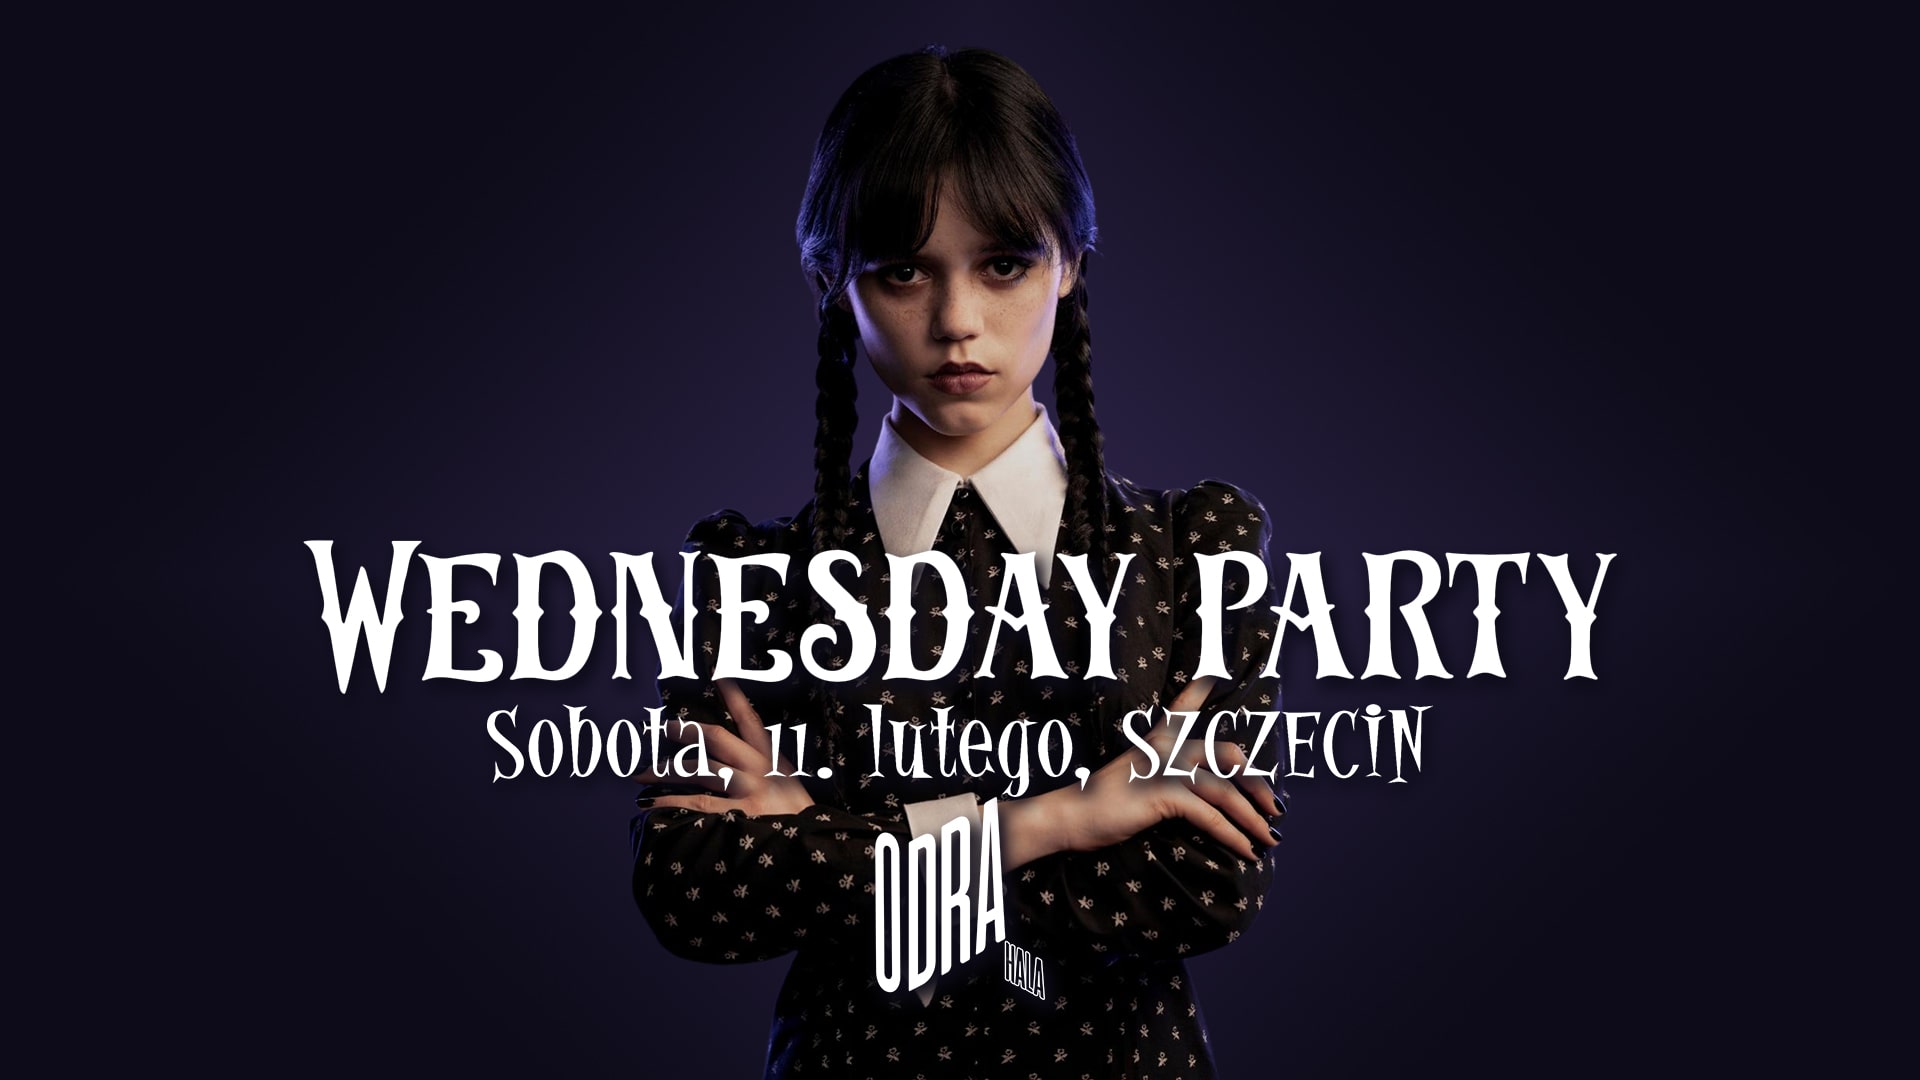 WEDNESDAY party | Rave’N Dance | Szczecin!